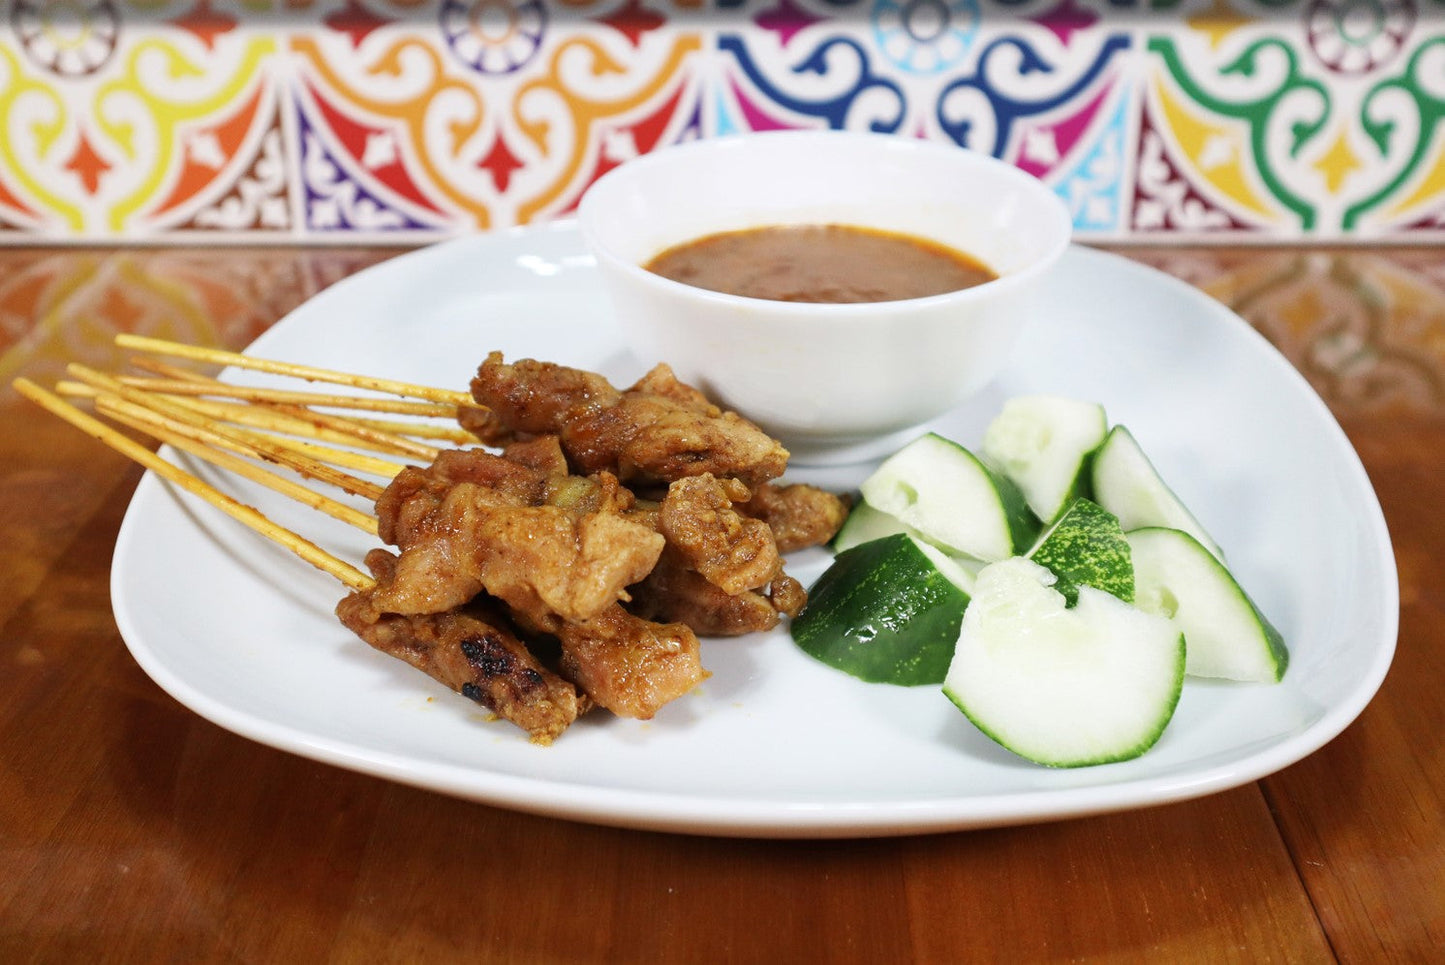 (Hormone Free) Hainanese Chicken Satay (10 sticks)